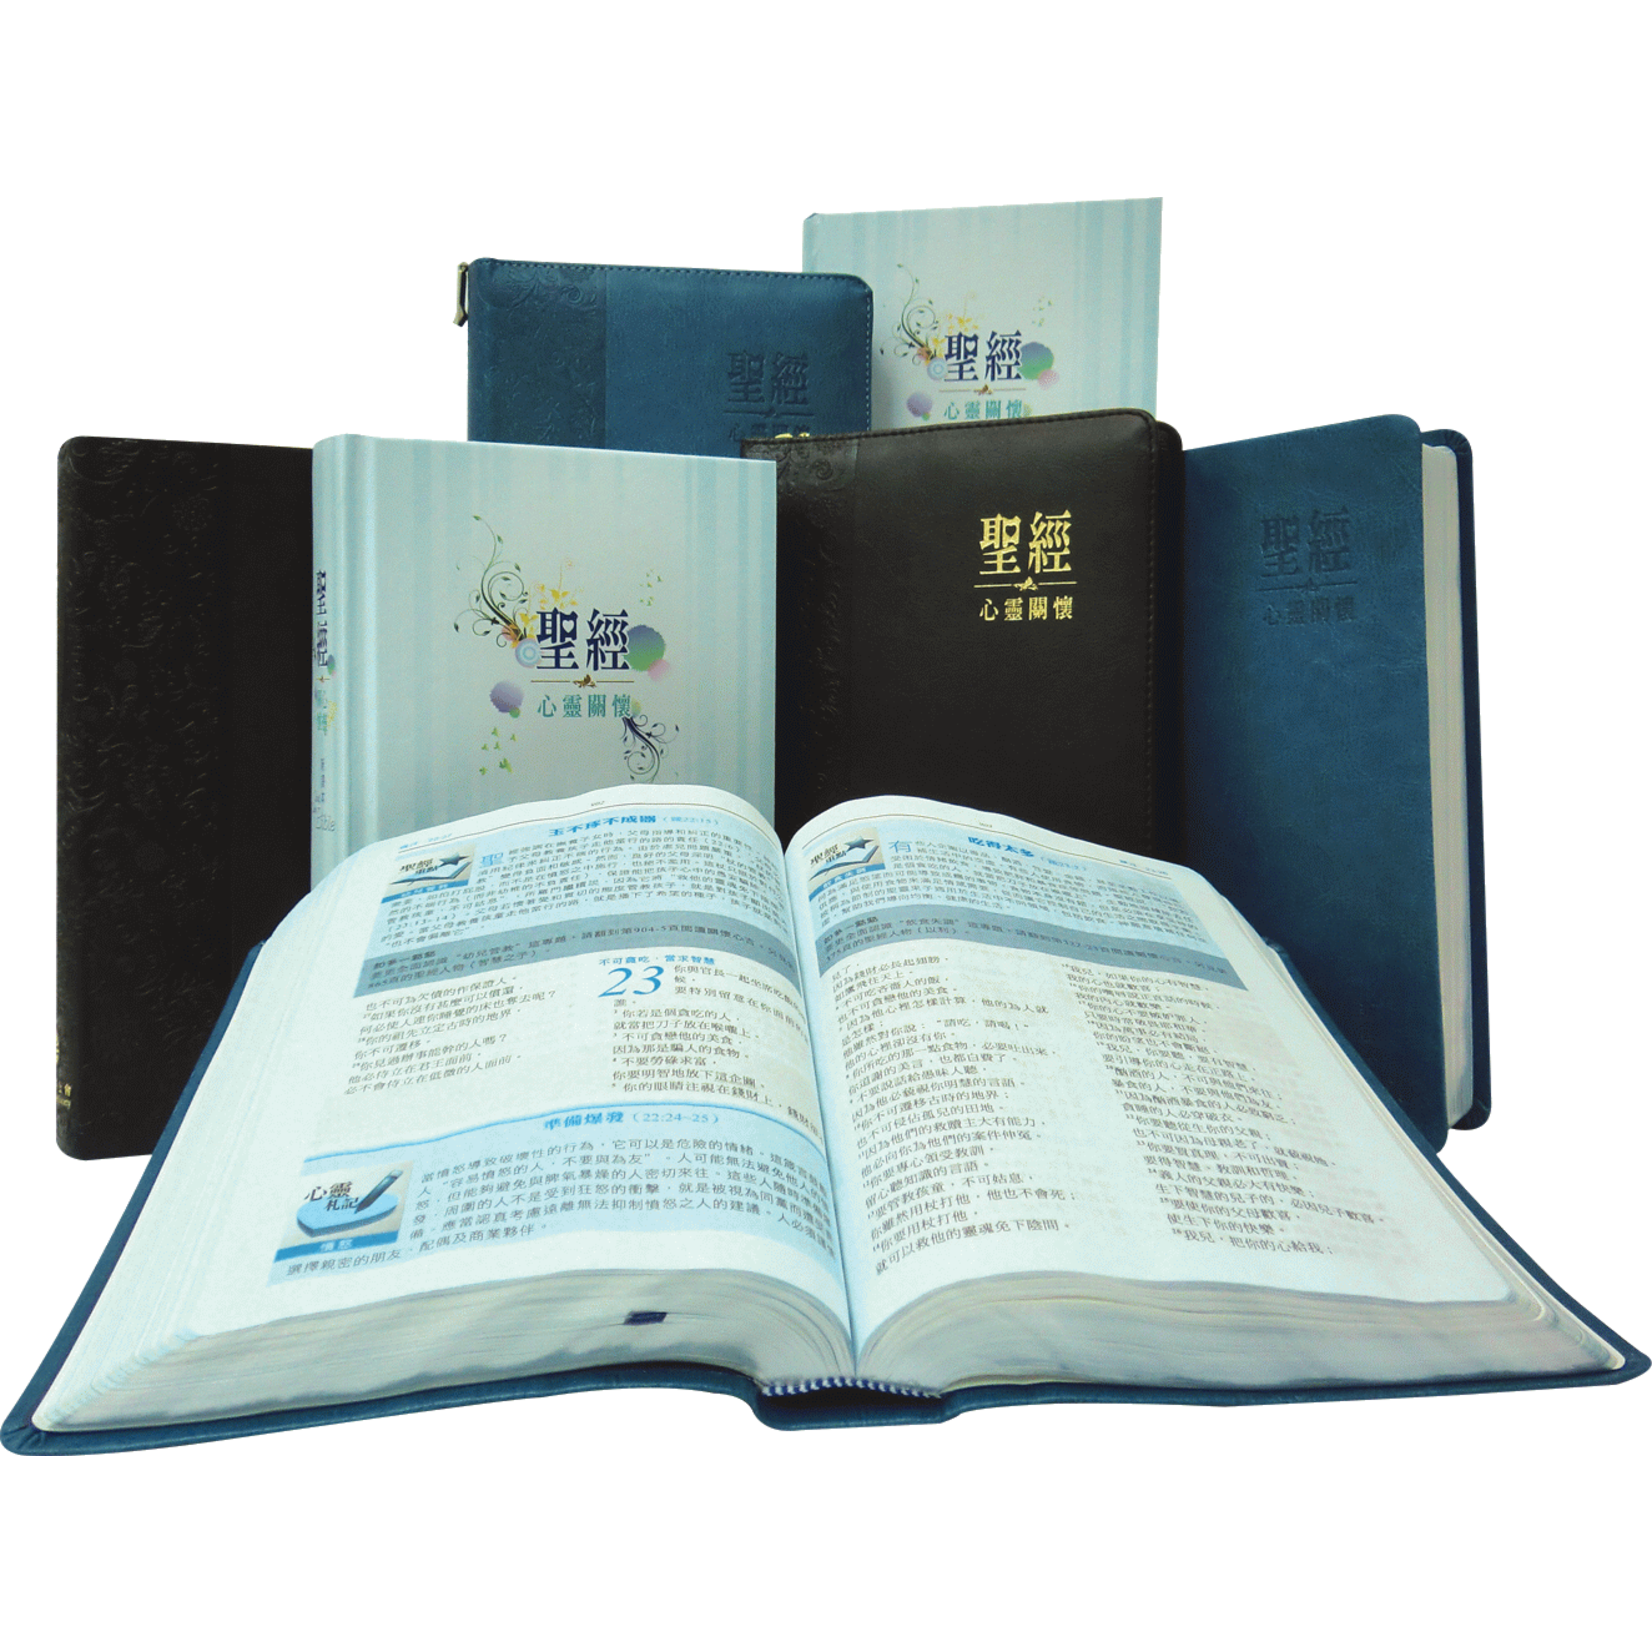 環球聖經公會 The Worldwide Bible Society 心靈關懷聖經・新譯本・彩色精裝白邊・簡體 CNV Soul Care Bible Simp., Standard, Color Hardback Cover, White Edge